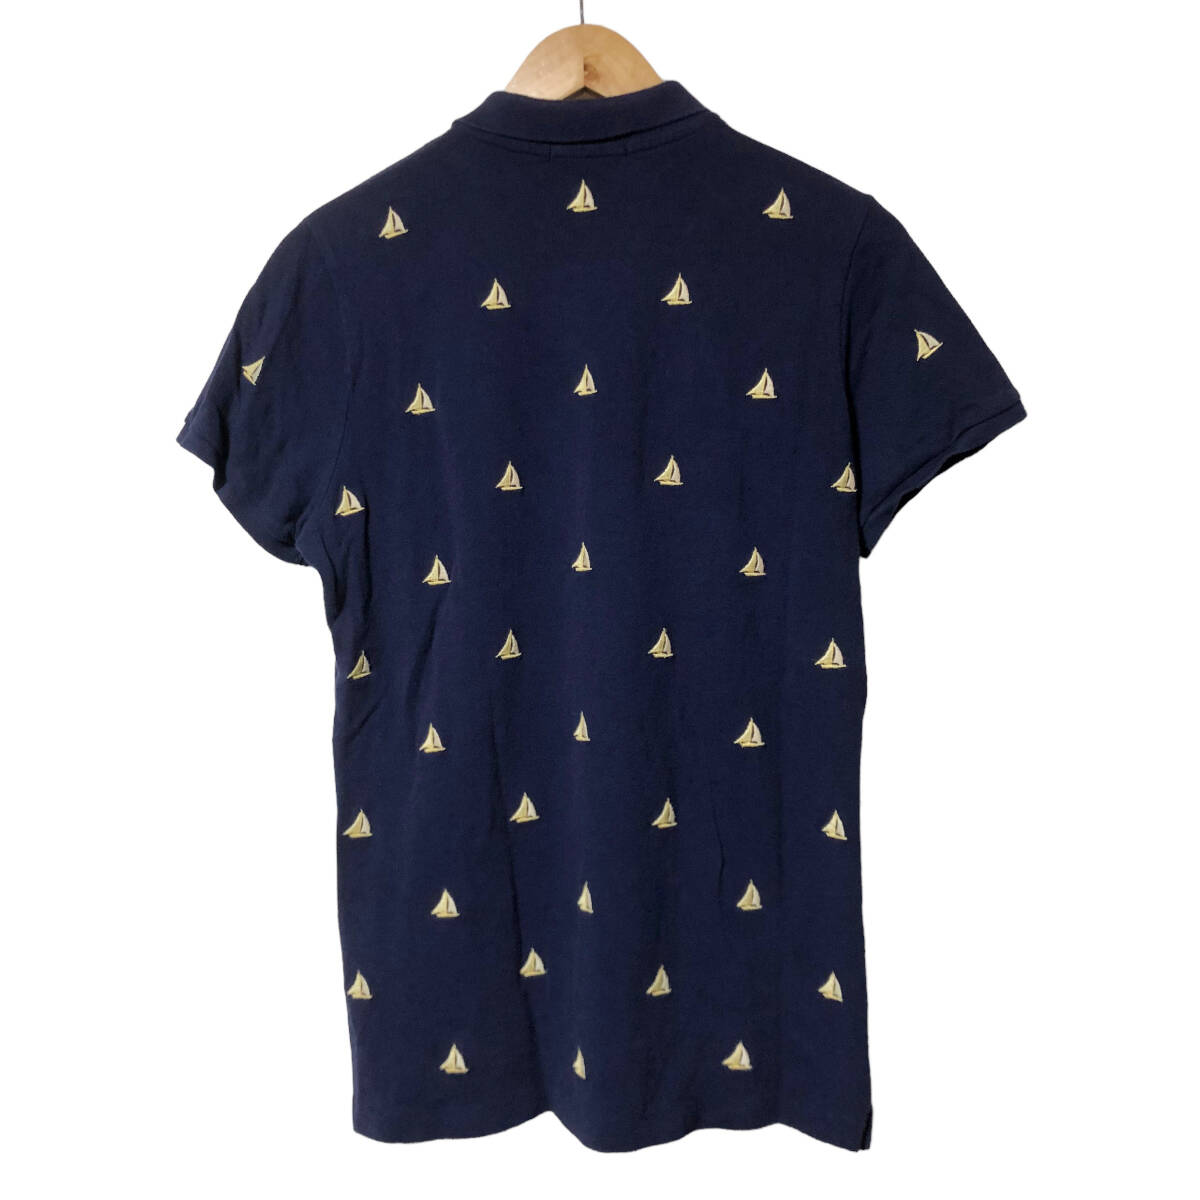 Ralph Lauren Ralph Lauren polo-shirt short sleeves yacht embroidery total pattern L navy lady's A33